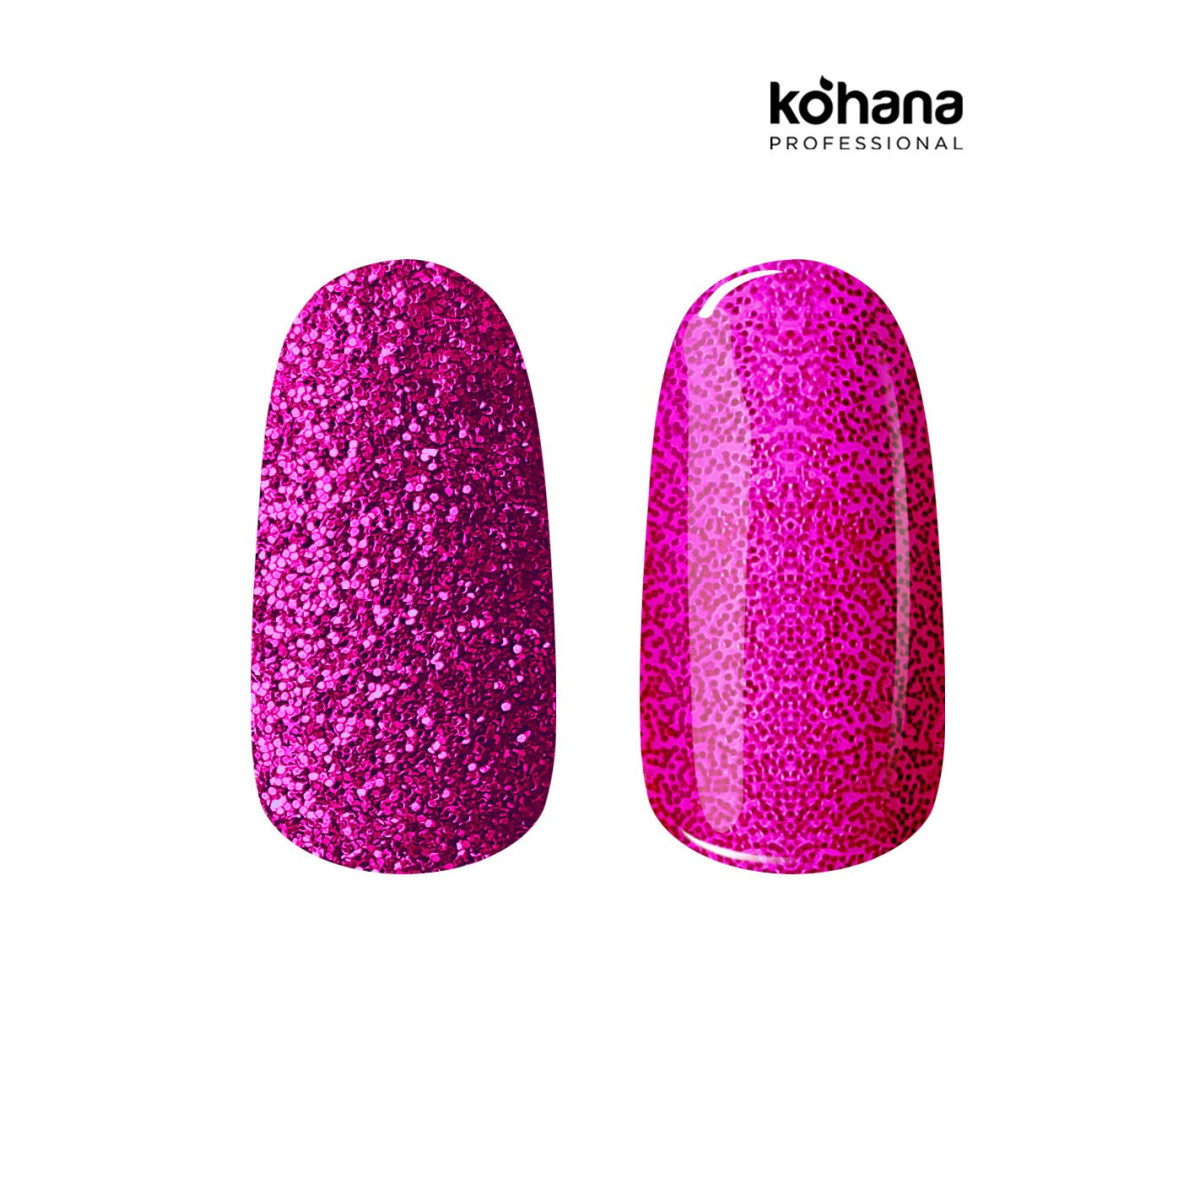 Kohana Glitter Effect - Hot Pink 2,5 g